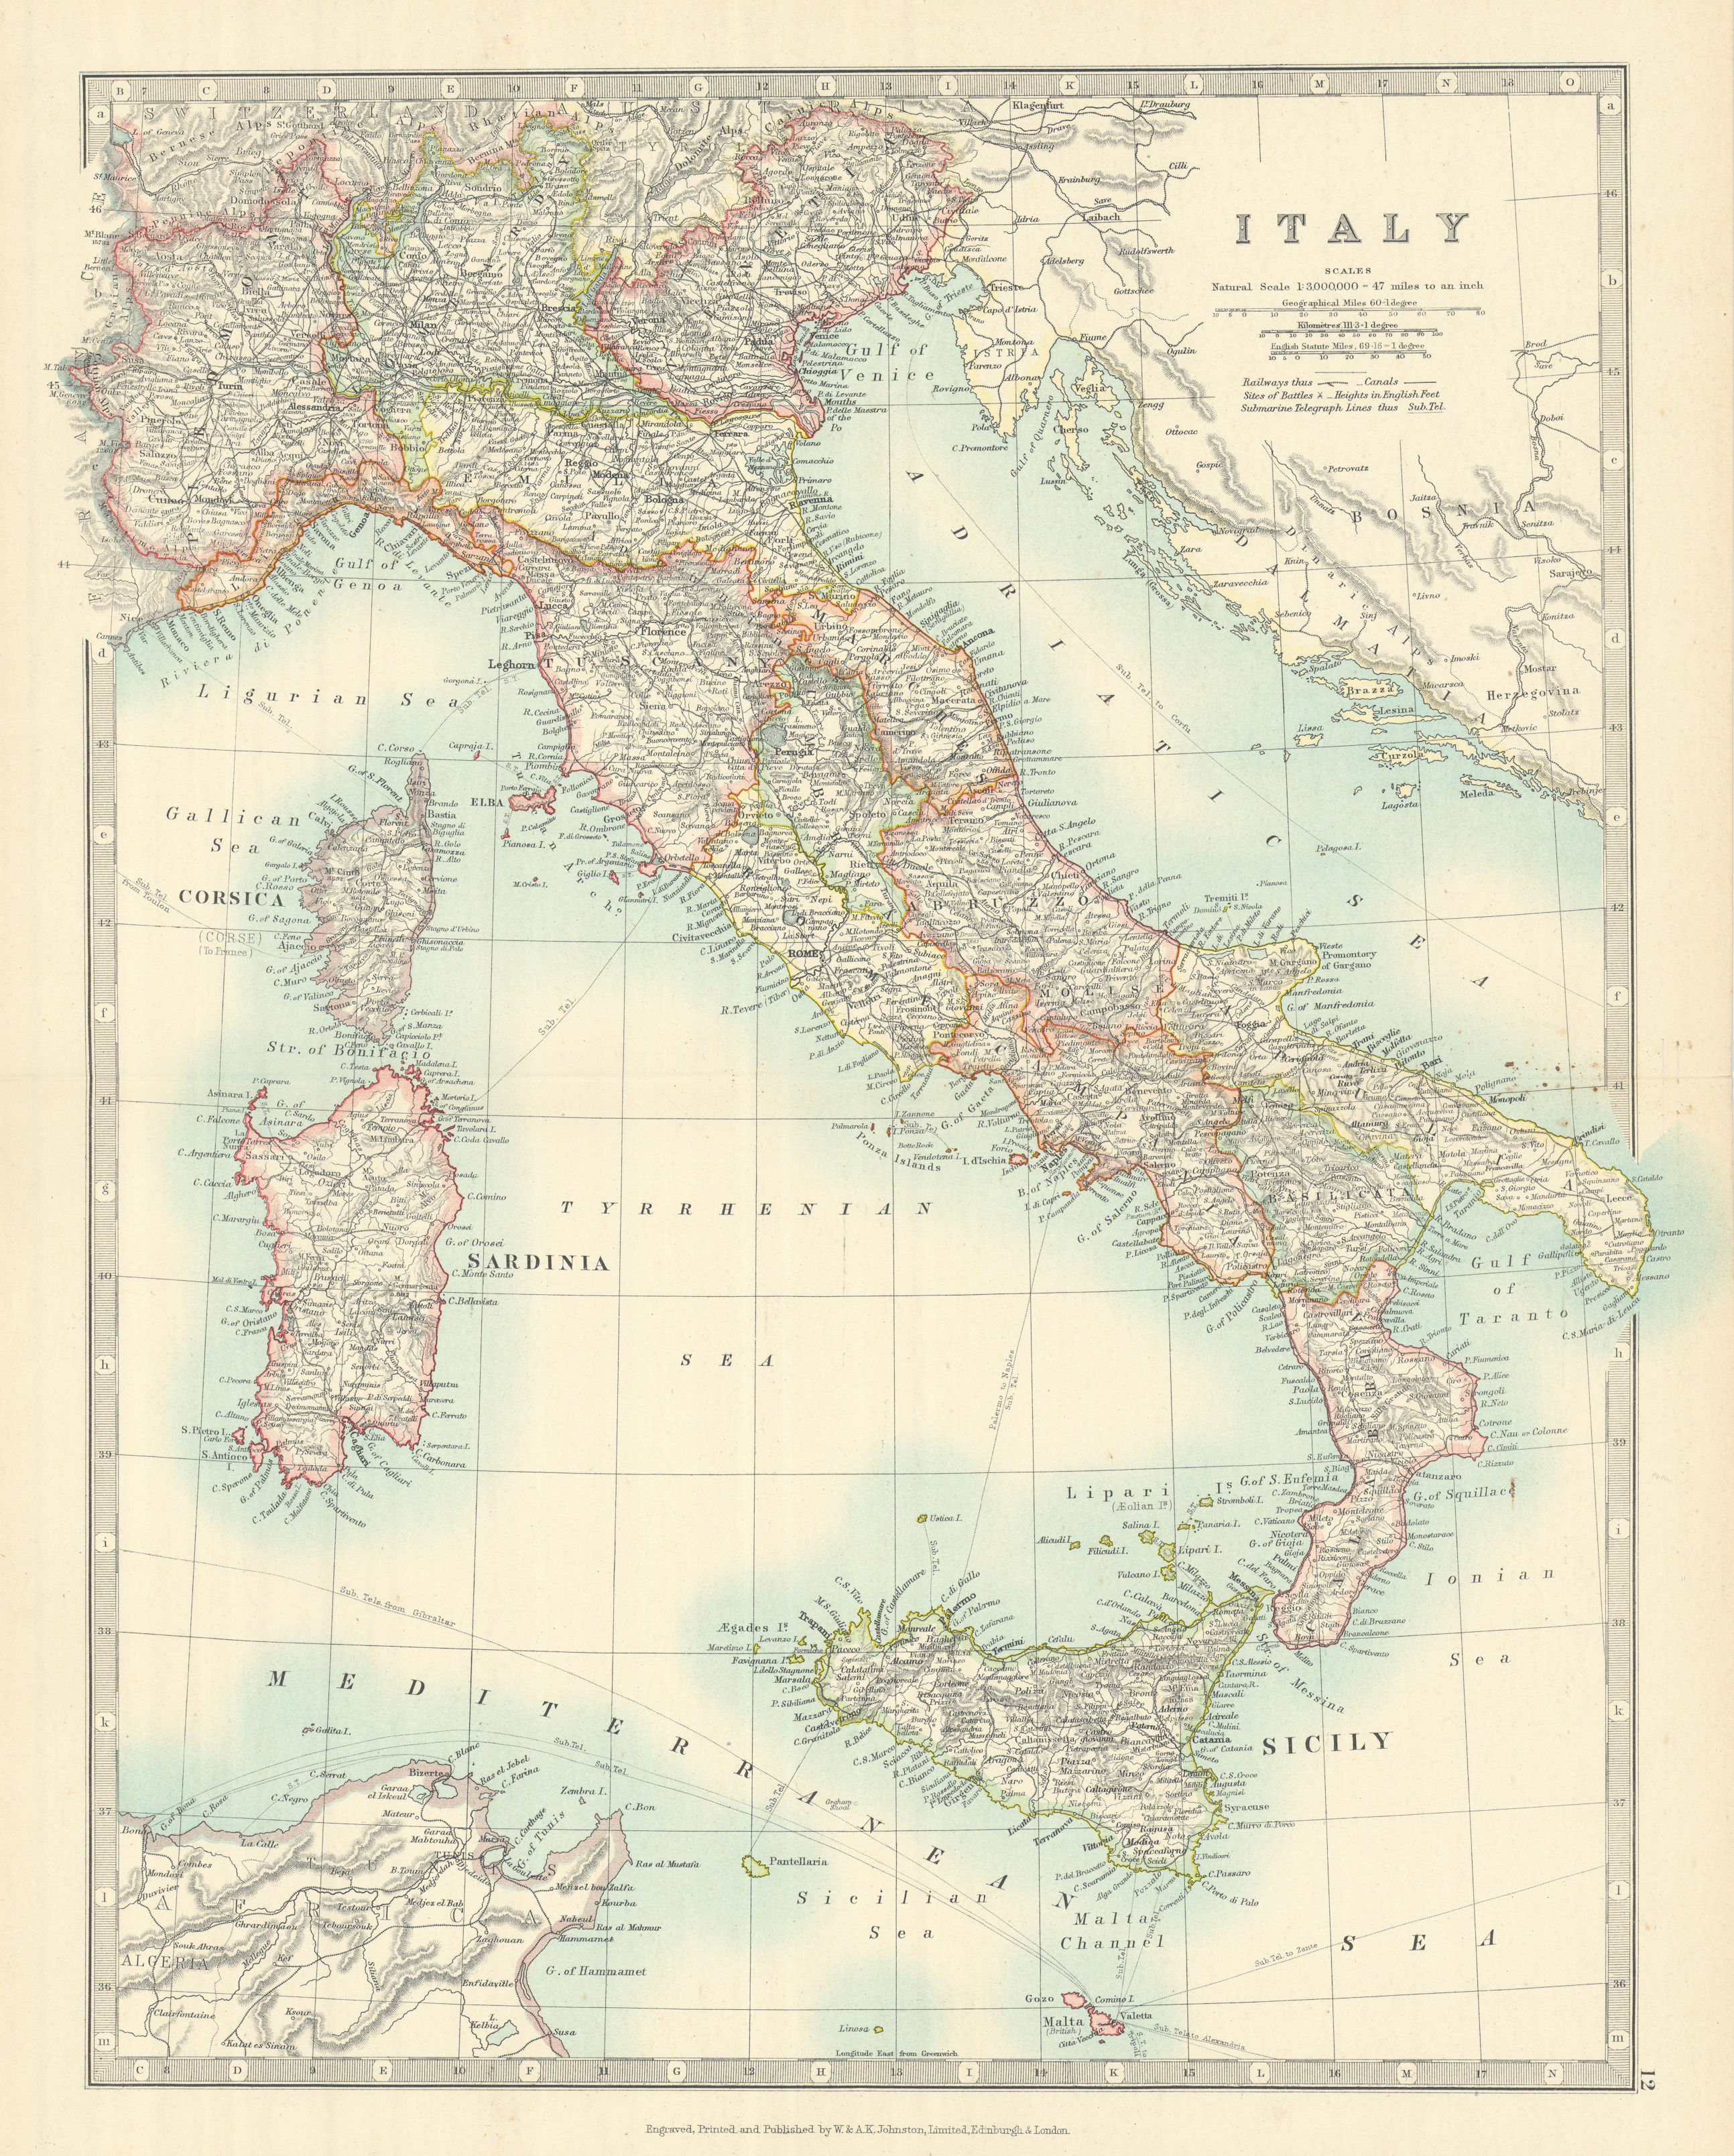 Associate Product ITALY. Railways. Key battlefields & dates. JOHNSTON 1913 old antique map chart